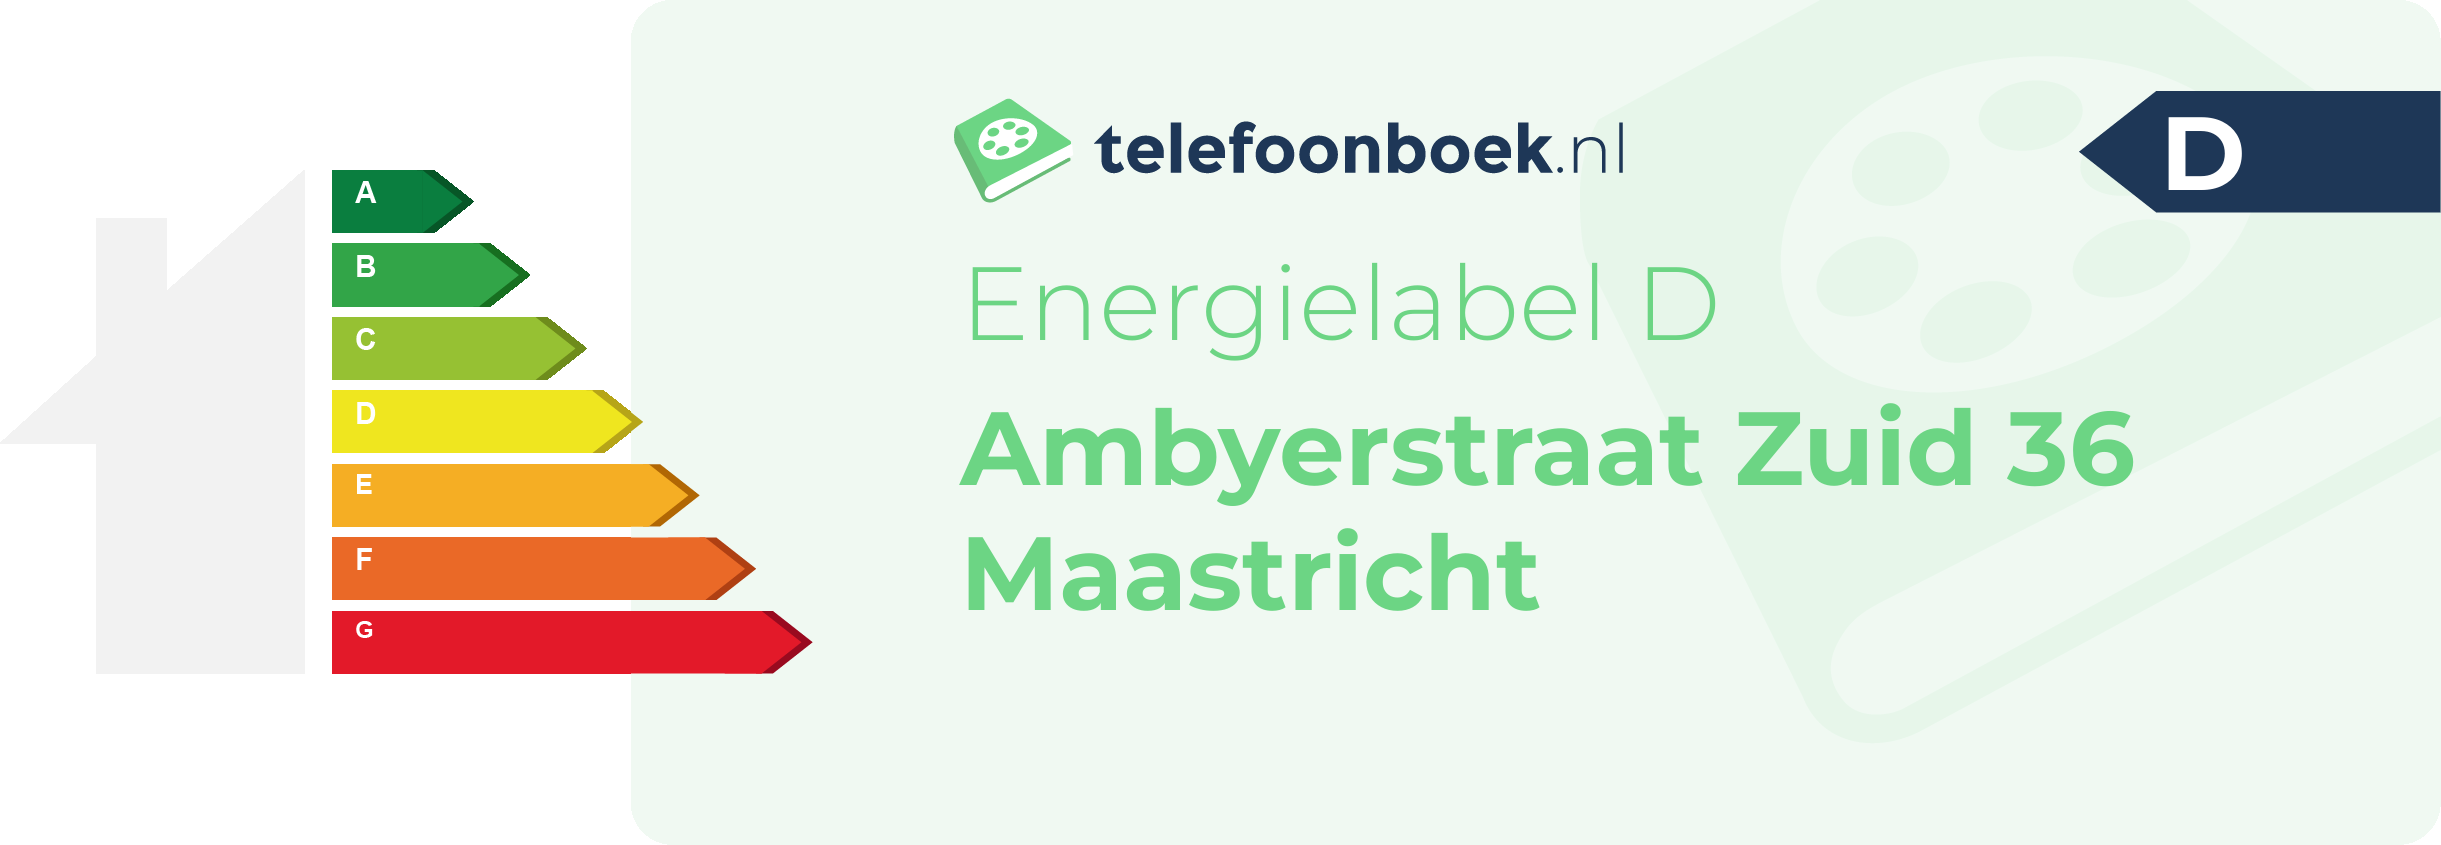 Energielabel Ambyerstraat Zuid 36 Maastricht